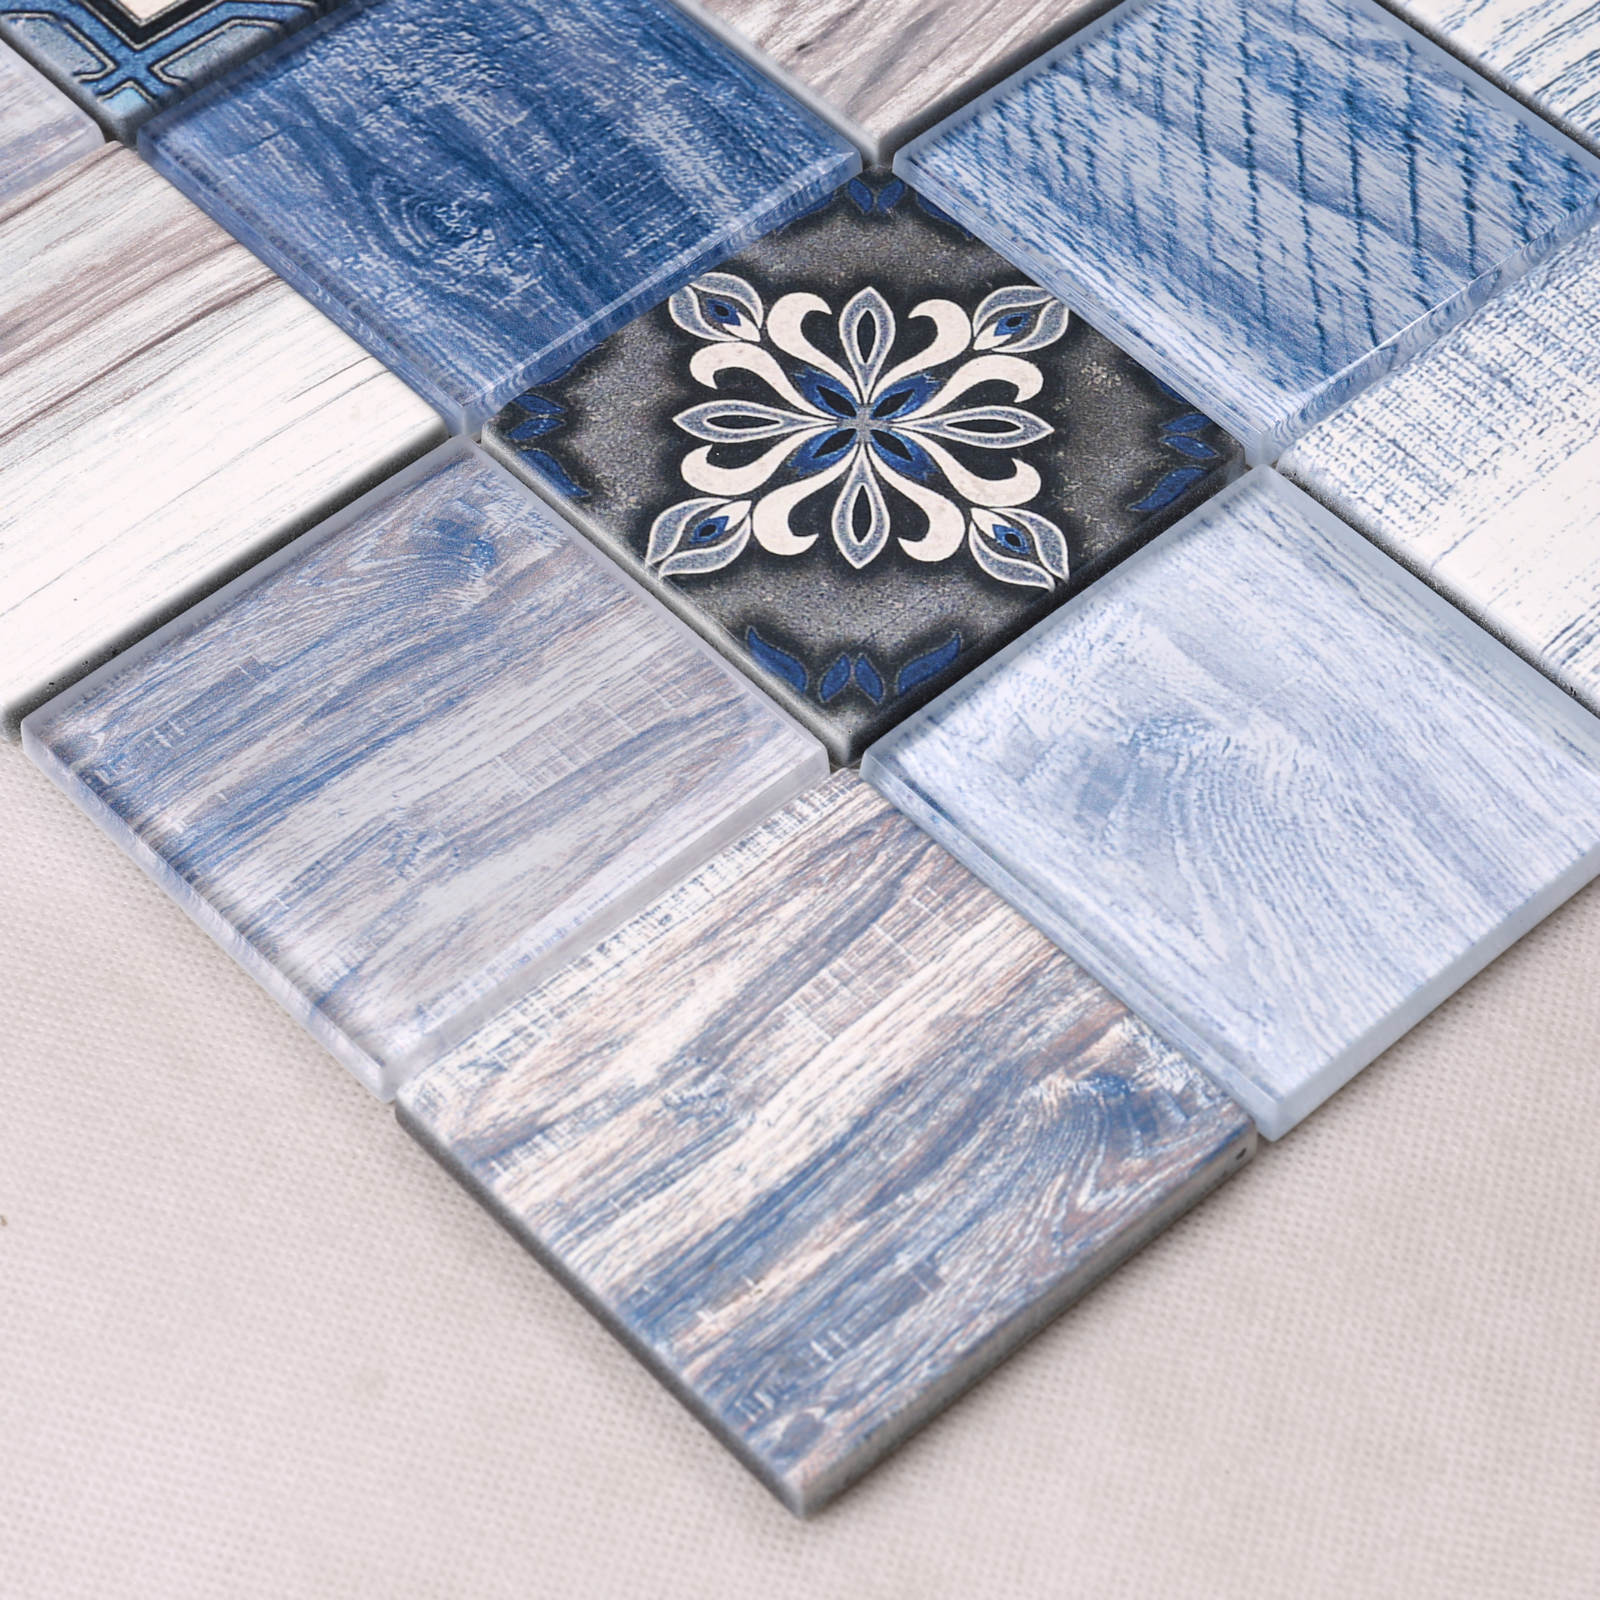 Heng Xing tiles larex sun wood tile manufacturers for hotel-3